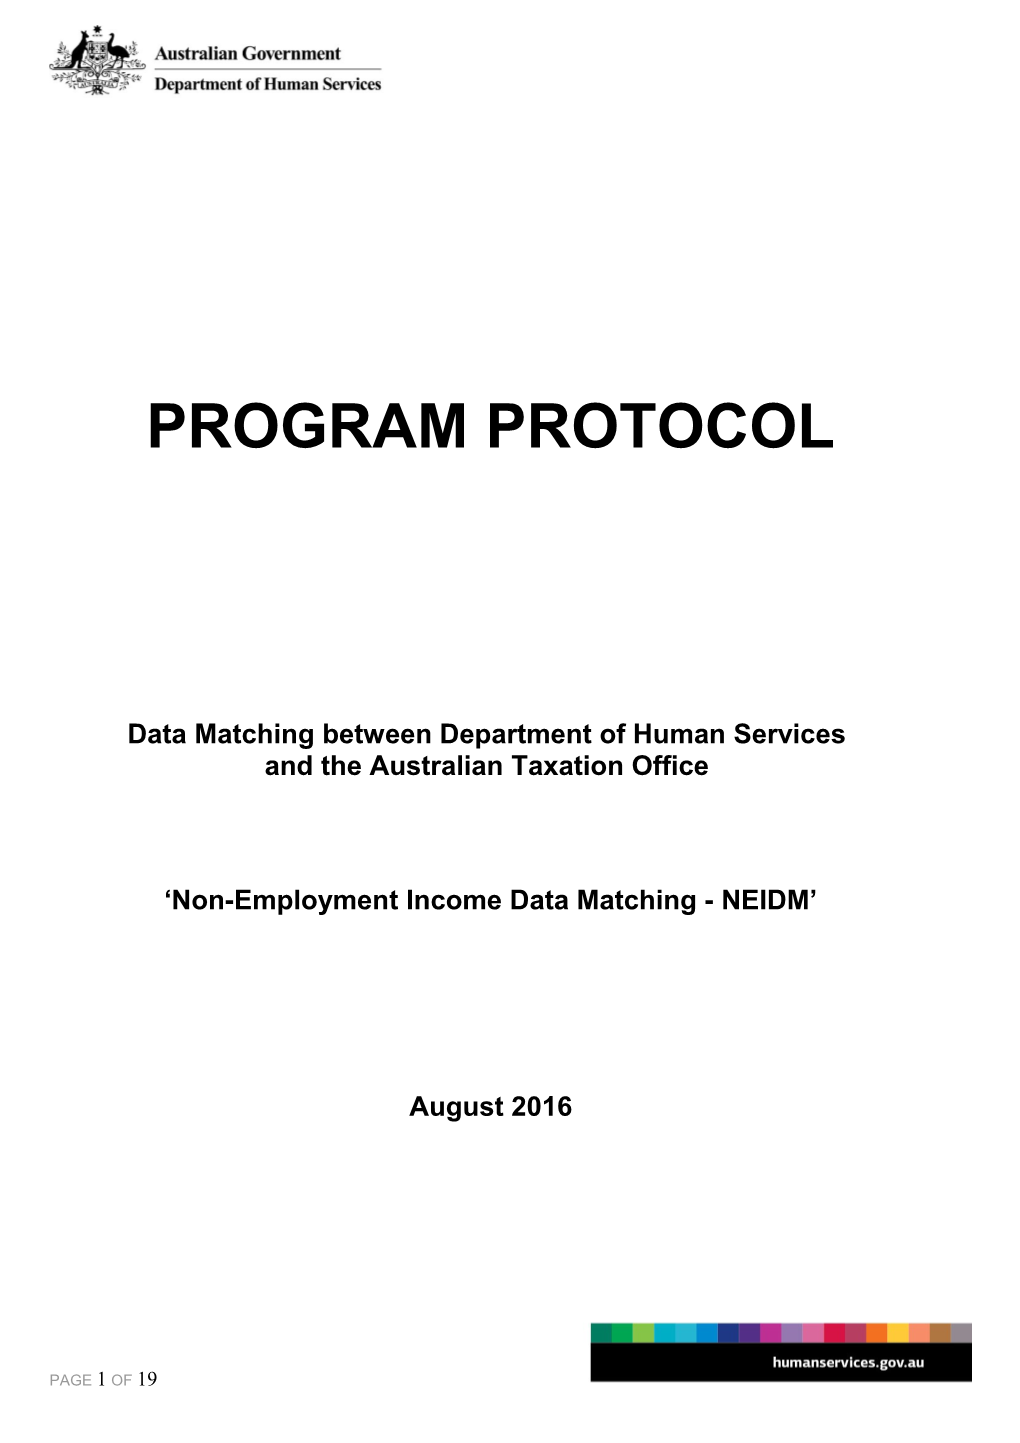 Program Protocol Non-Employment Income Data Matching (NEIDM) August 2016